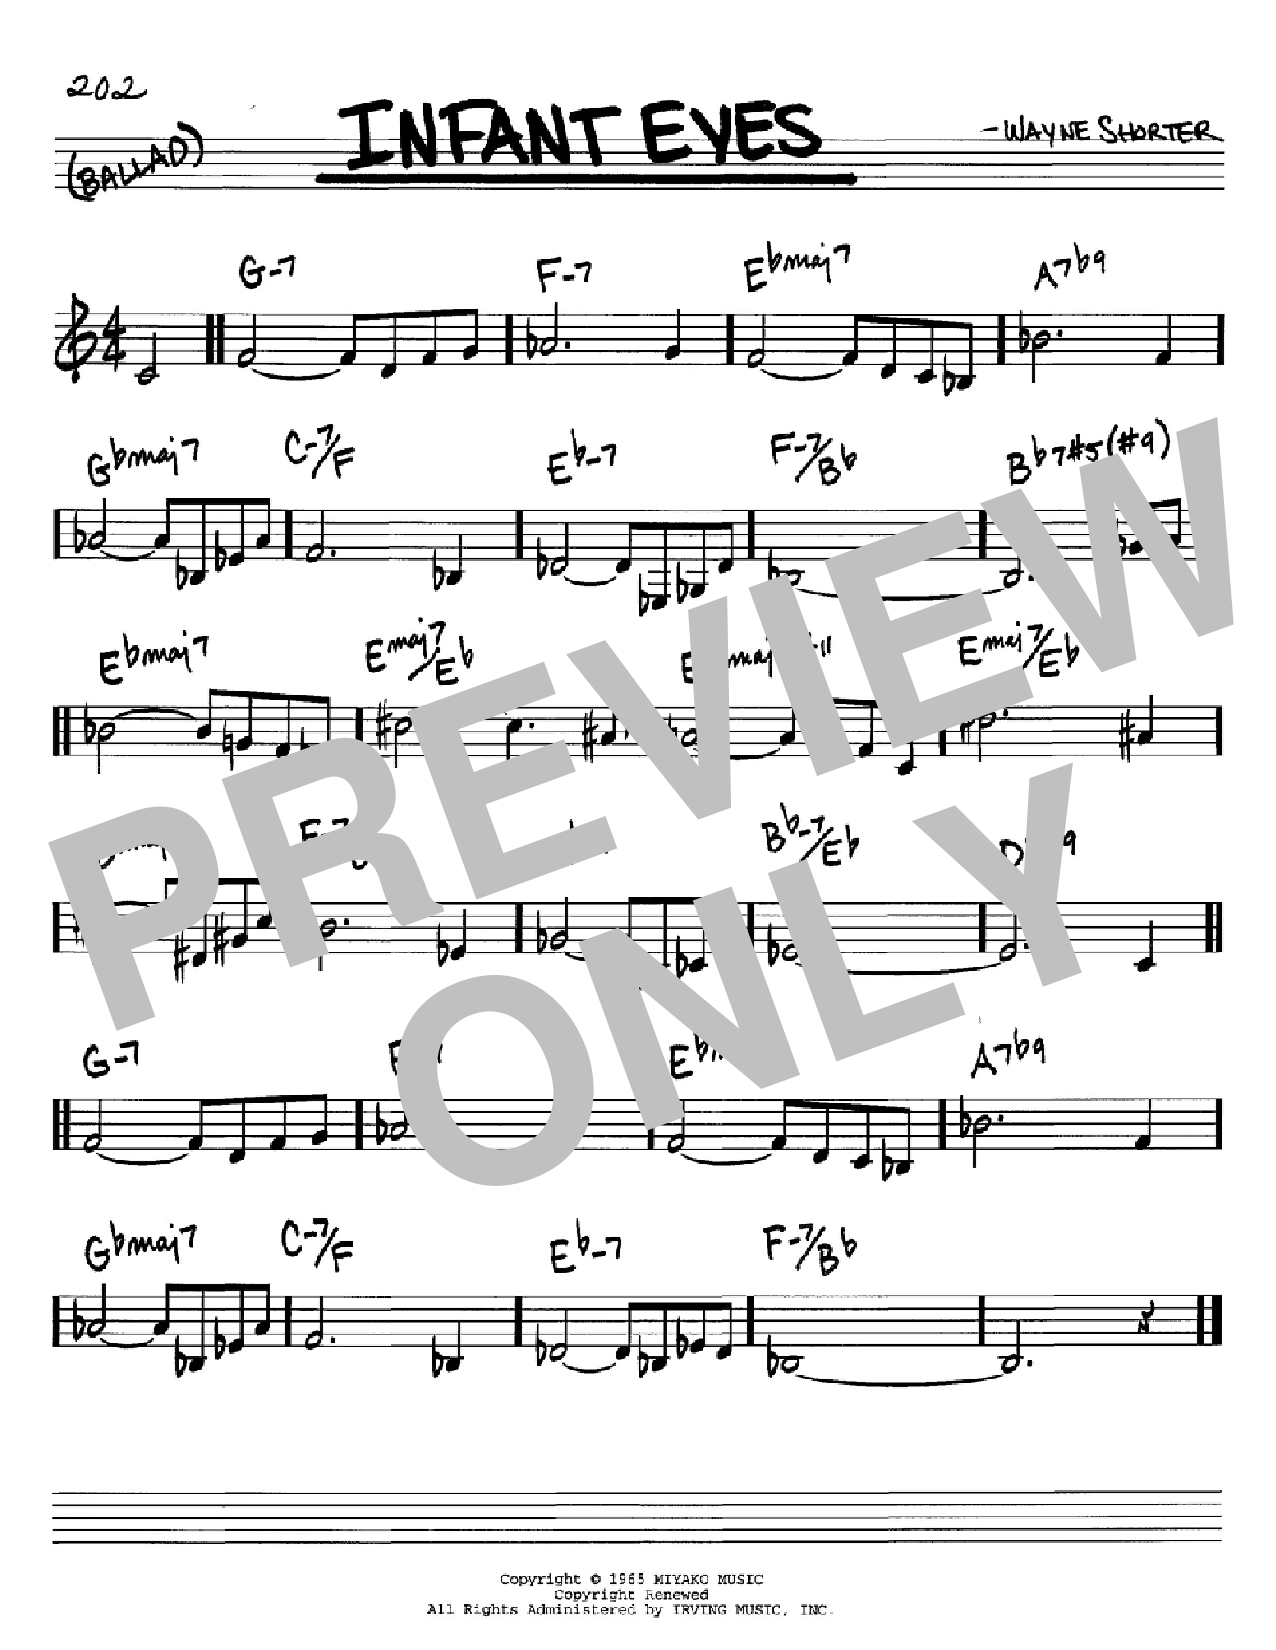 Wayne Shorter Infant Eyes Sheet Music Notes & Chords for Real Book - Melody & Chords - C Instruments - Download or Print PDF